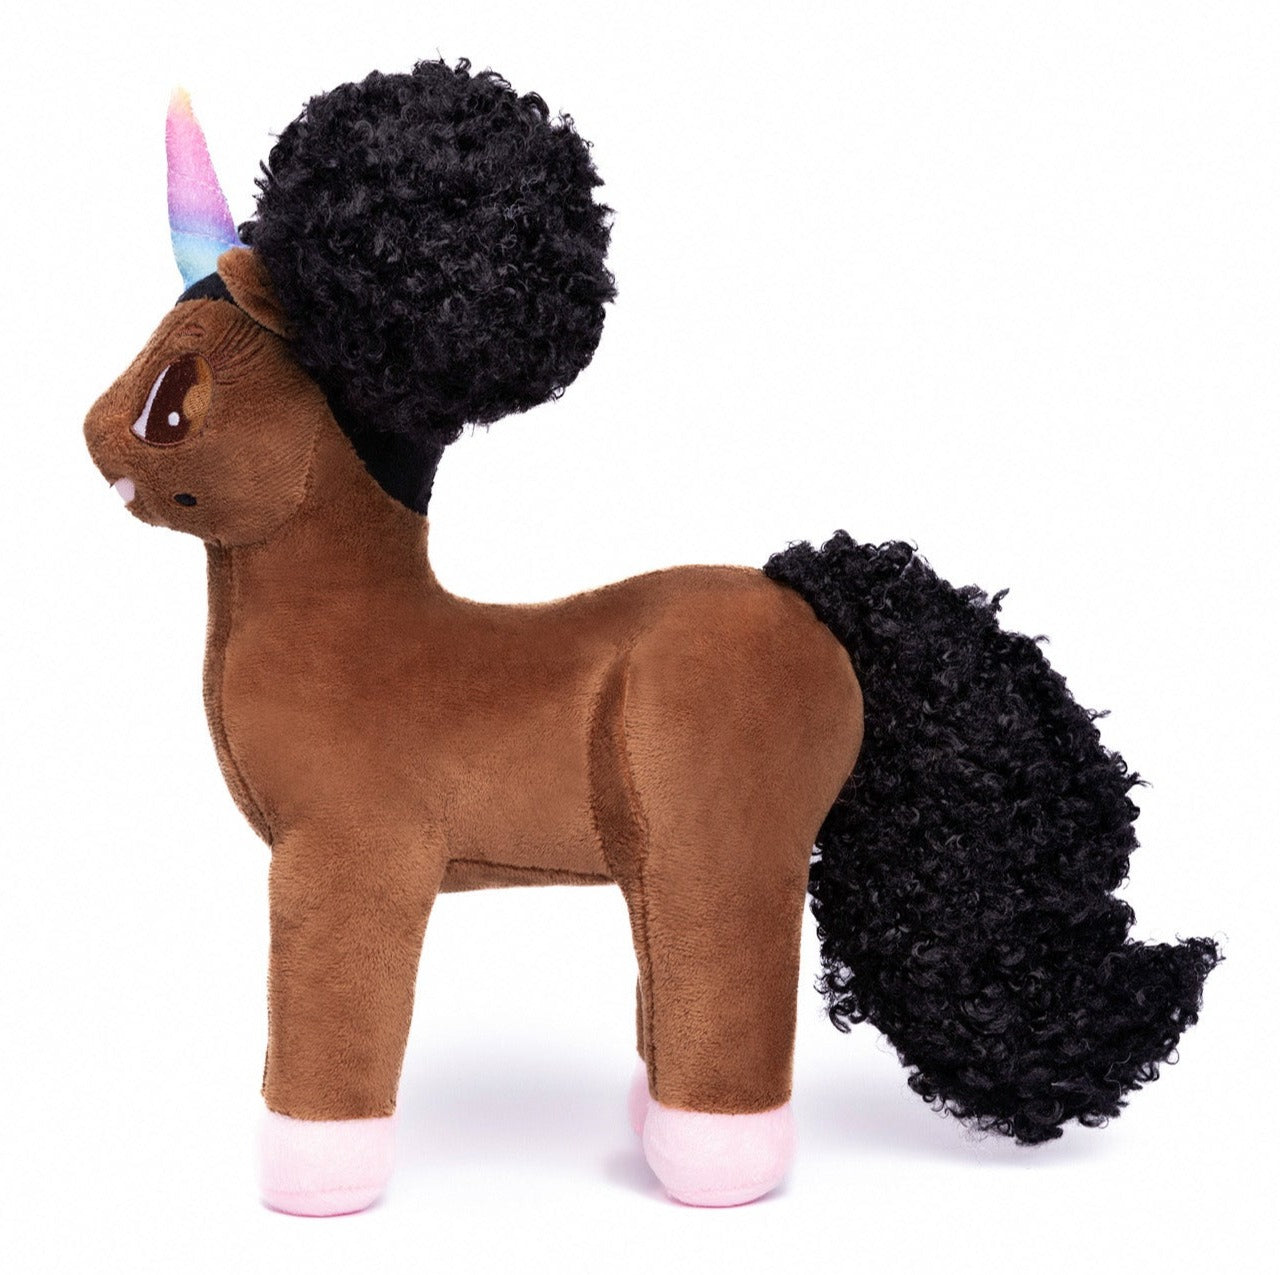 Armani Unicorn Plush Toy - 12 inch